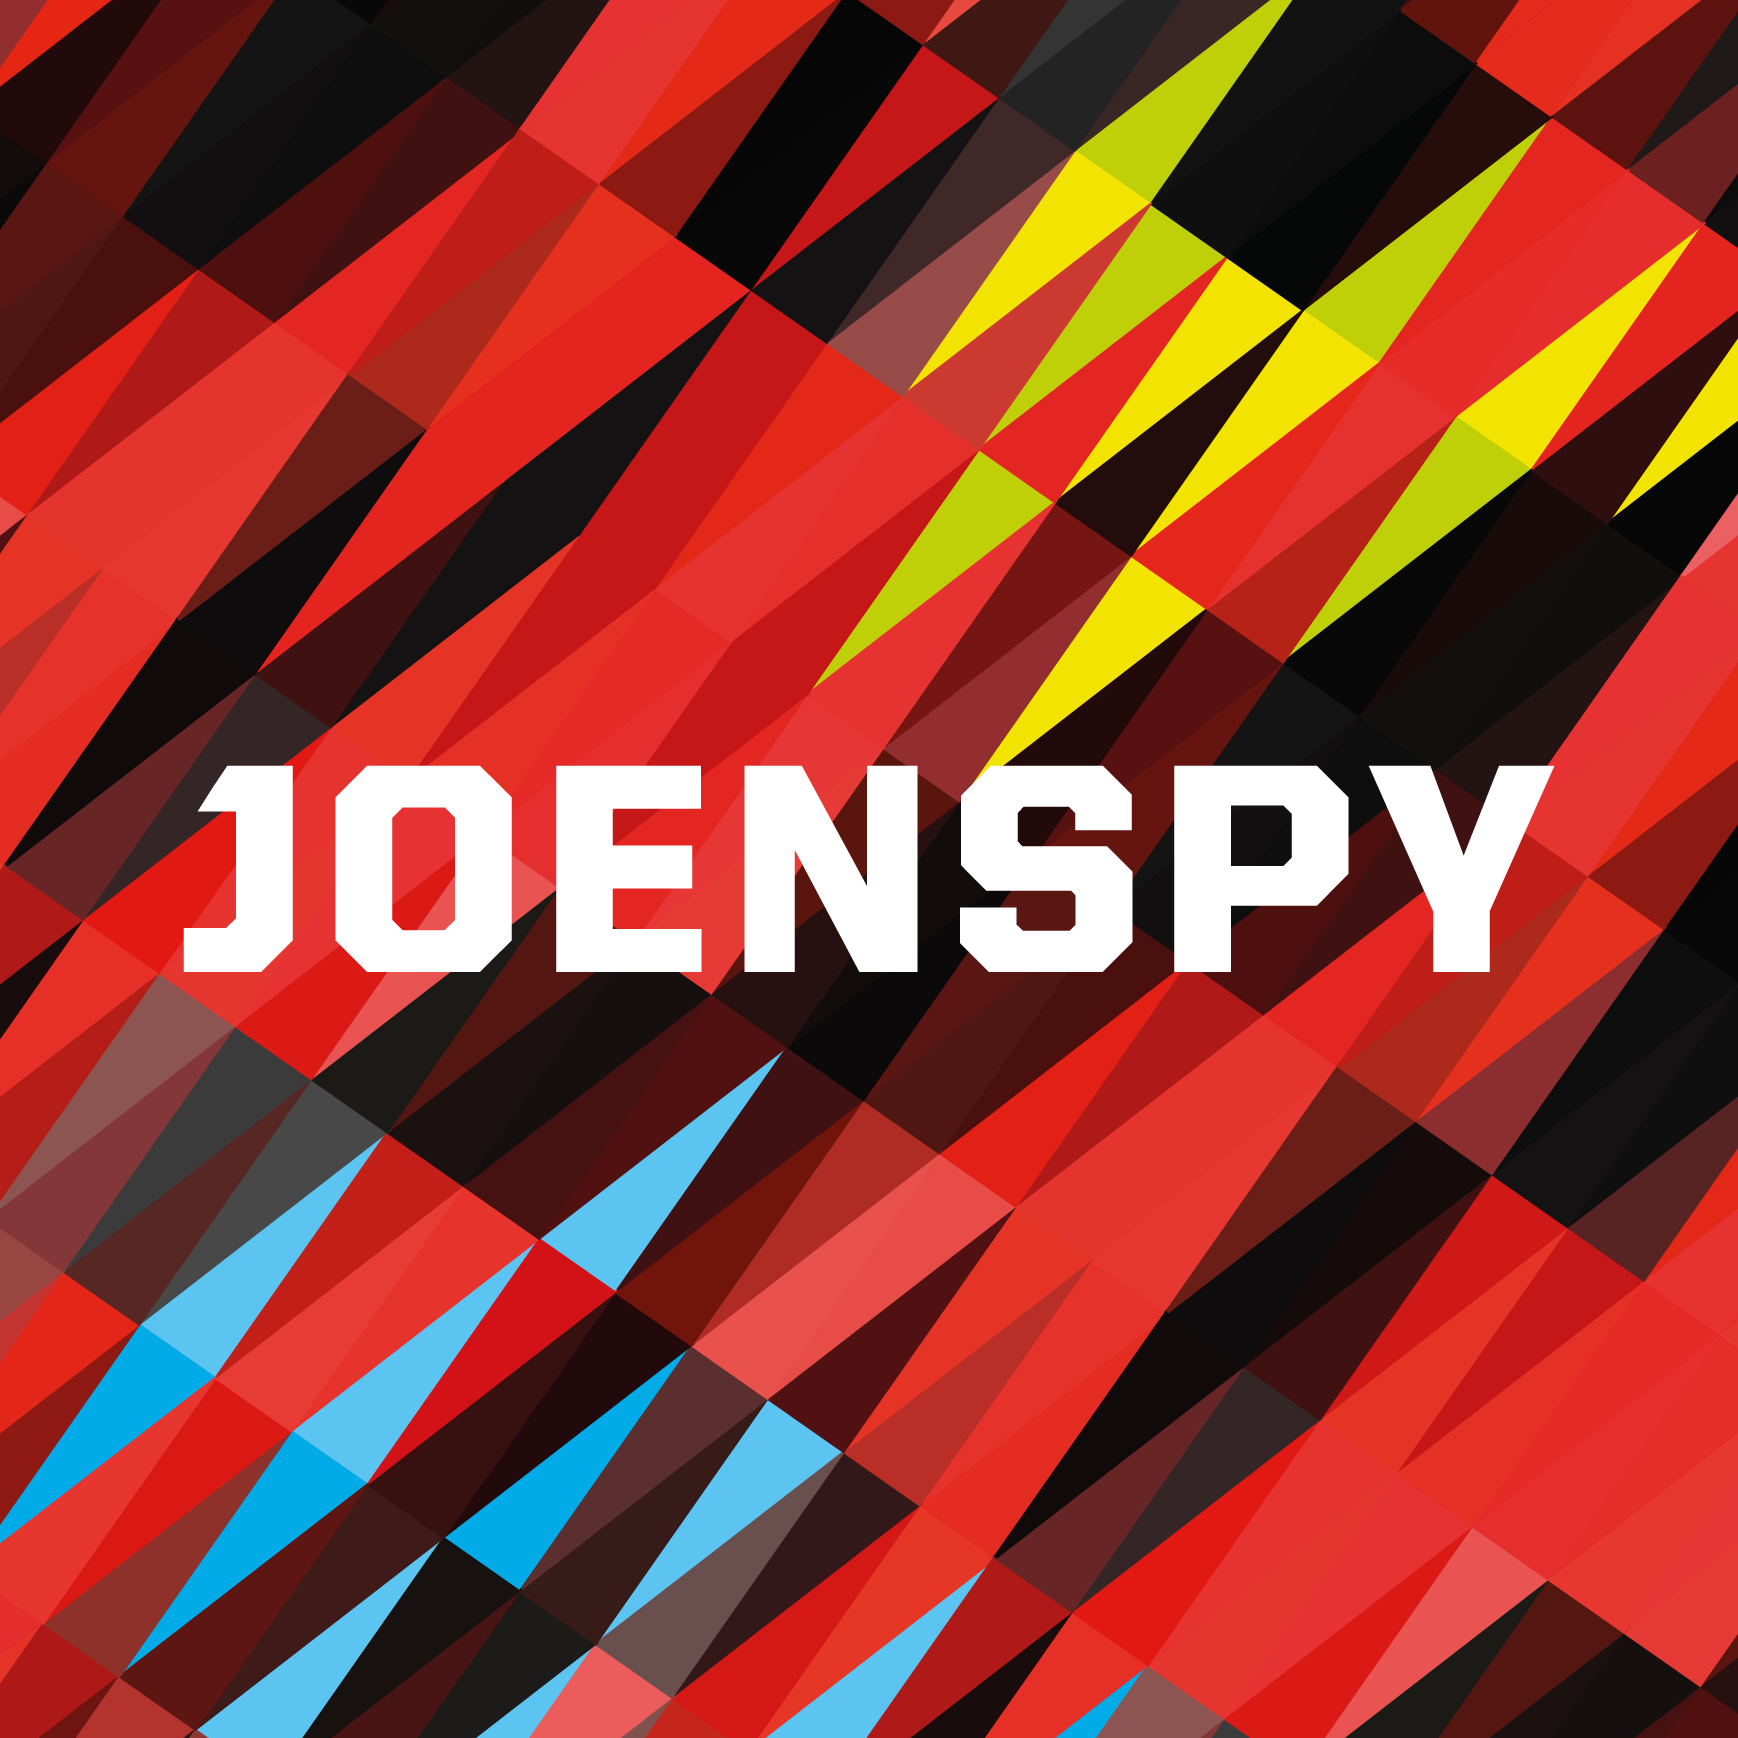 Club Image for JOENSPY